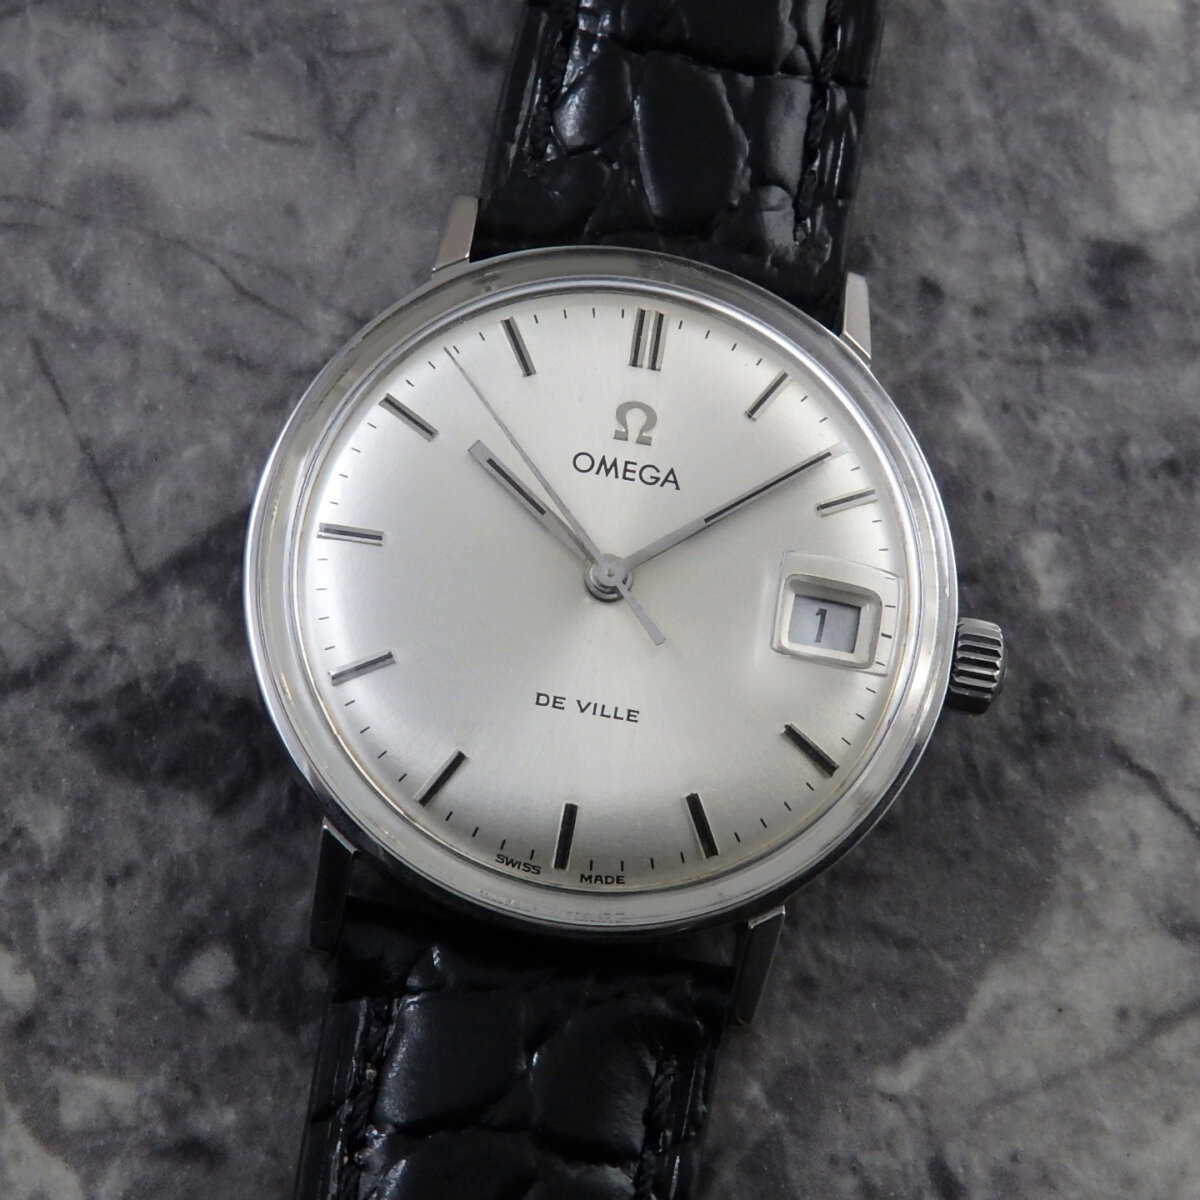 OMEGA DE VILLE 1970s | アンティーク時計の販売ならアンティーク ...